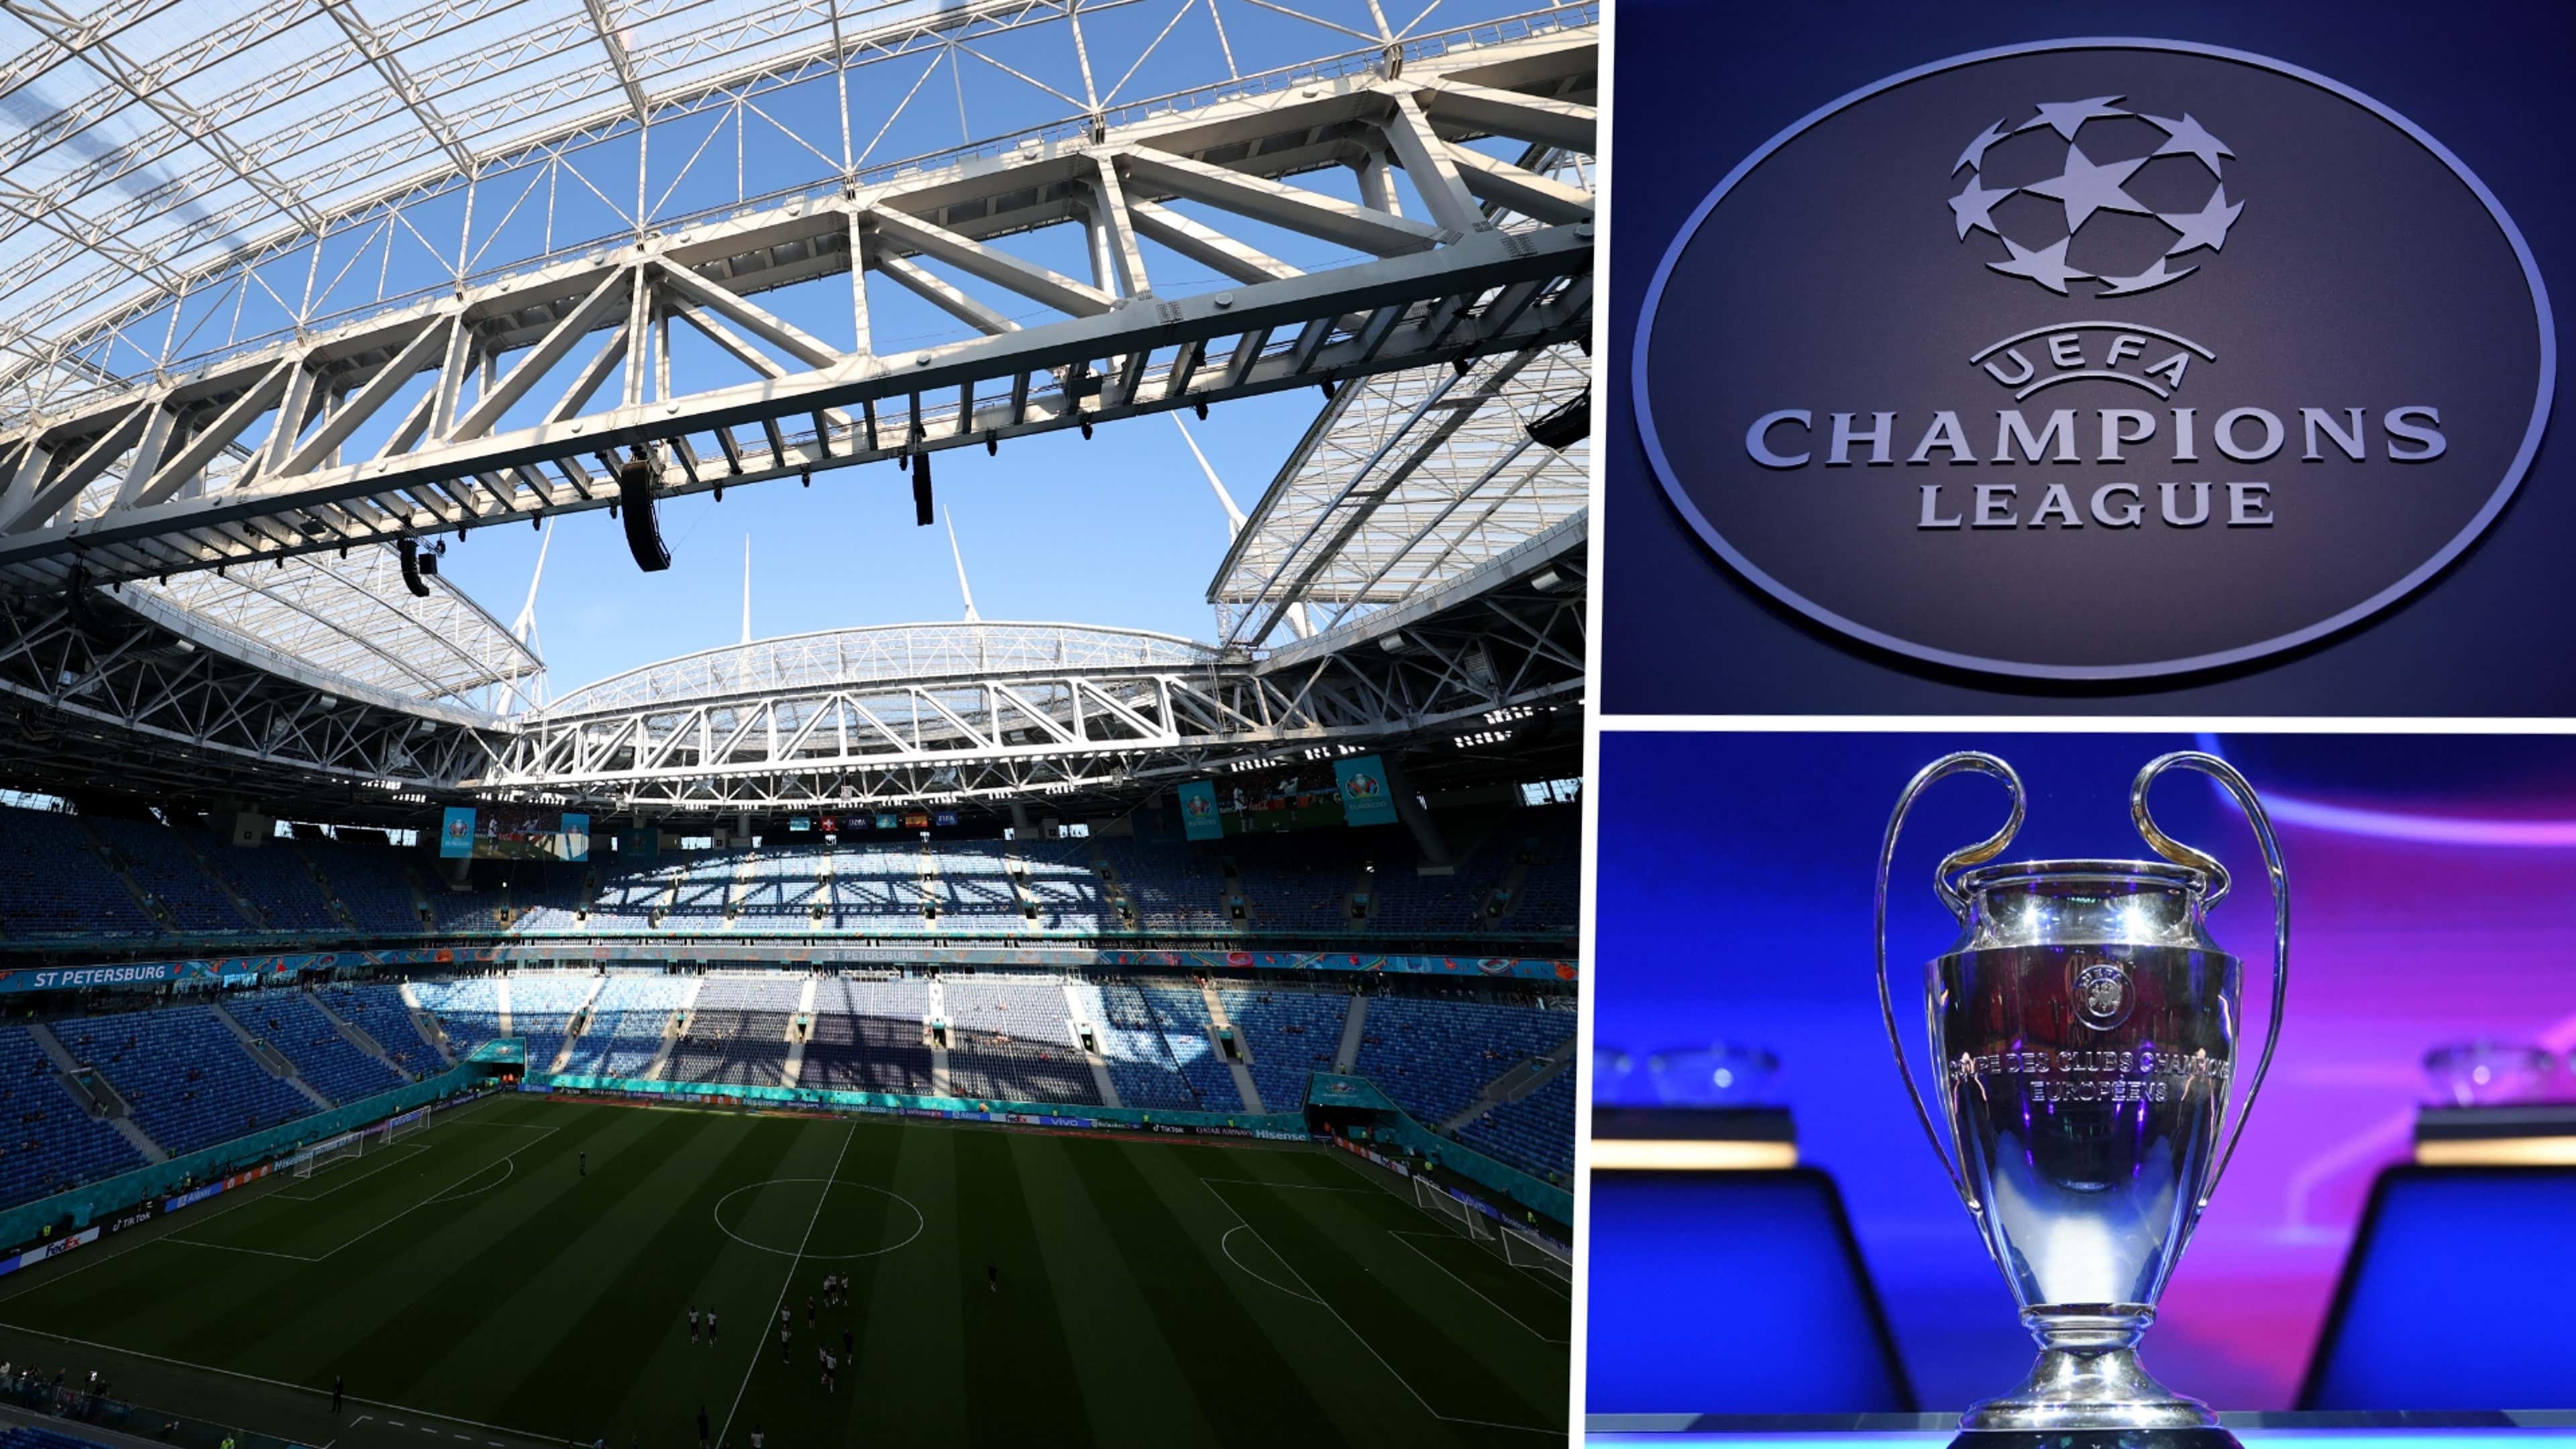 UEFA announce 2021/22 Champions League Team of the Season